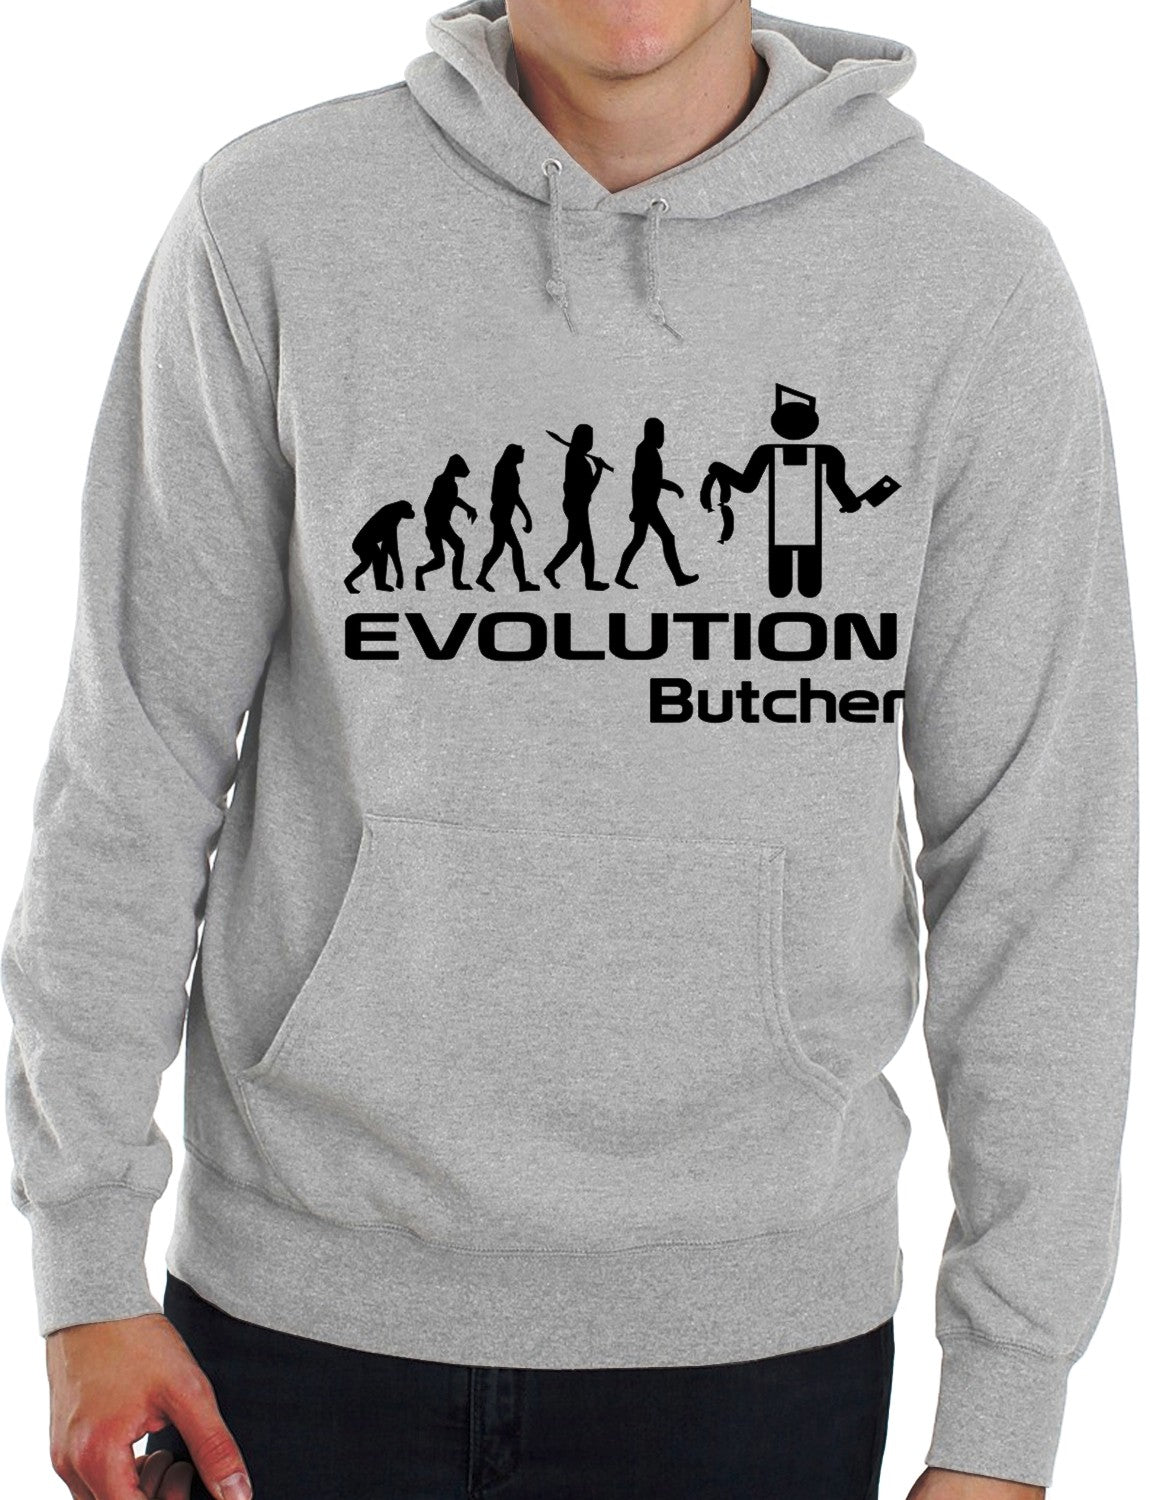 Evolution Of A Butcher Job Work Unisex Hoody